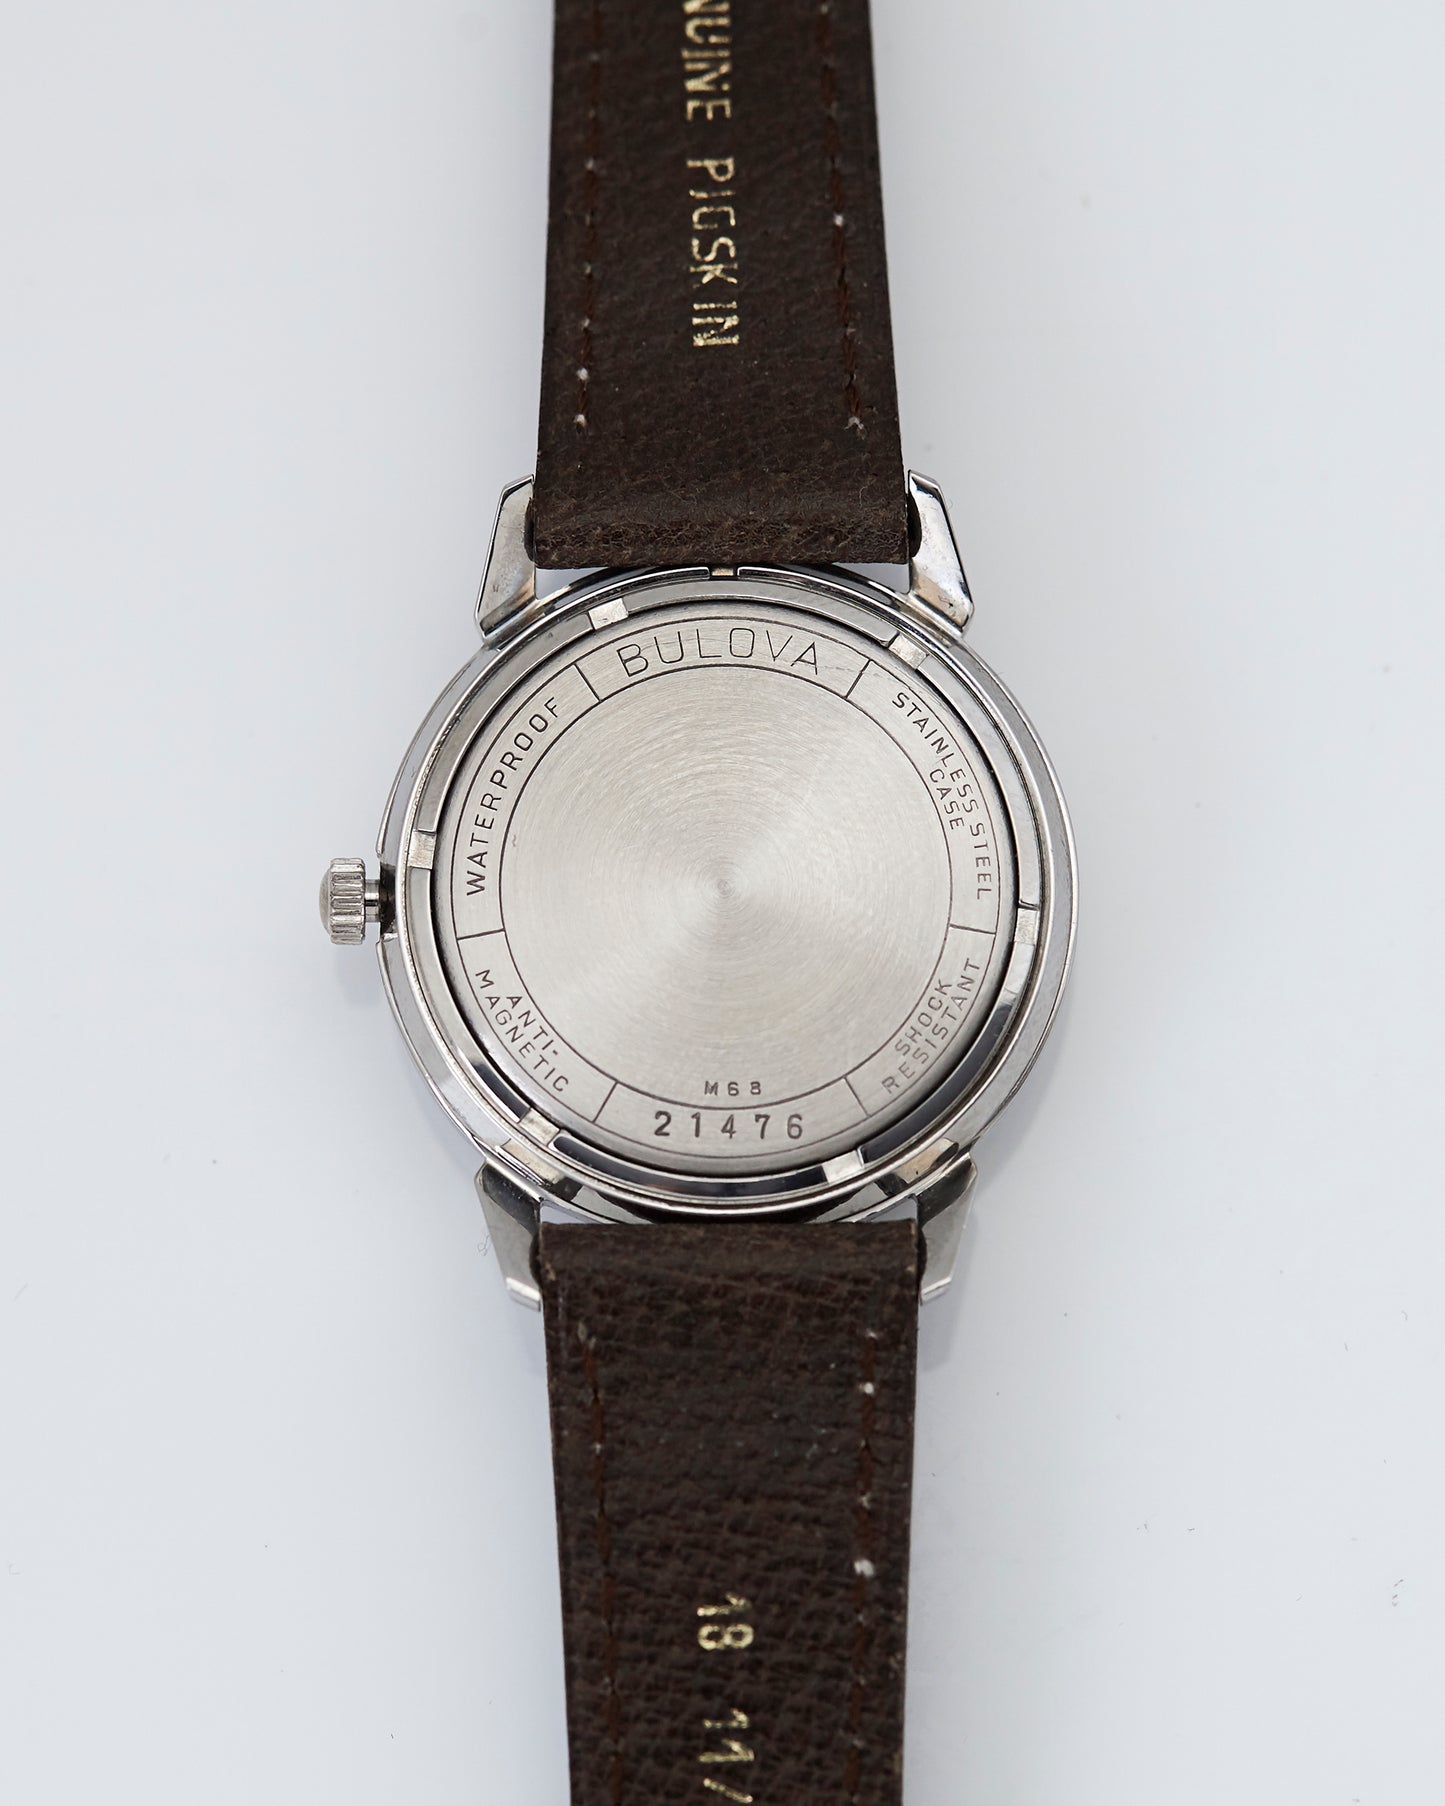 Bulova Sweep Second Date Manual Wind Vintage Wristwatch